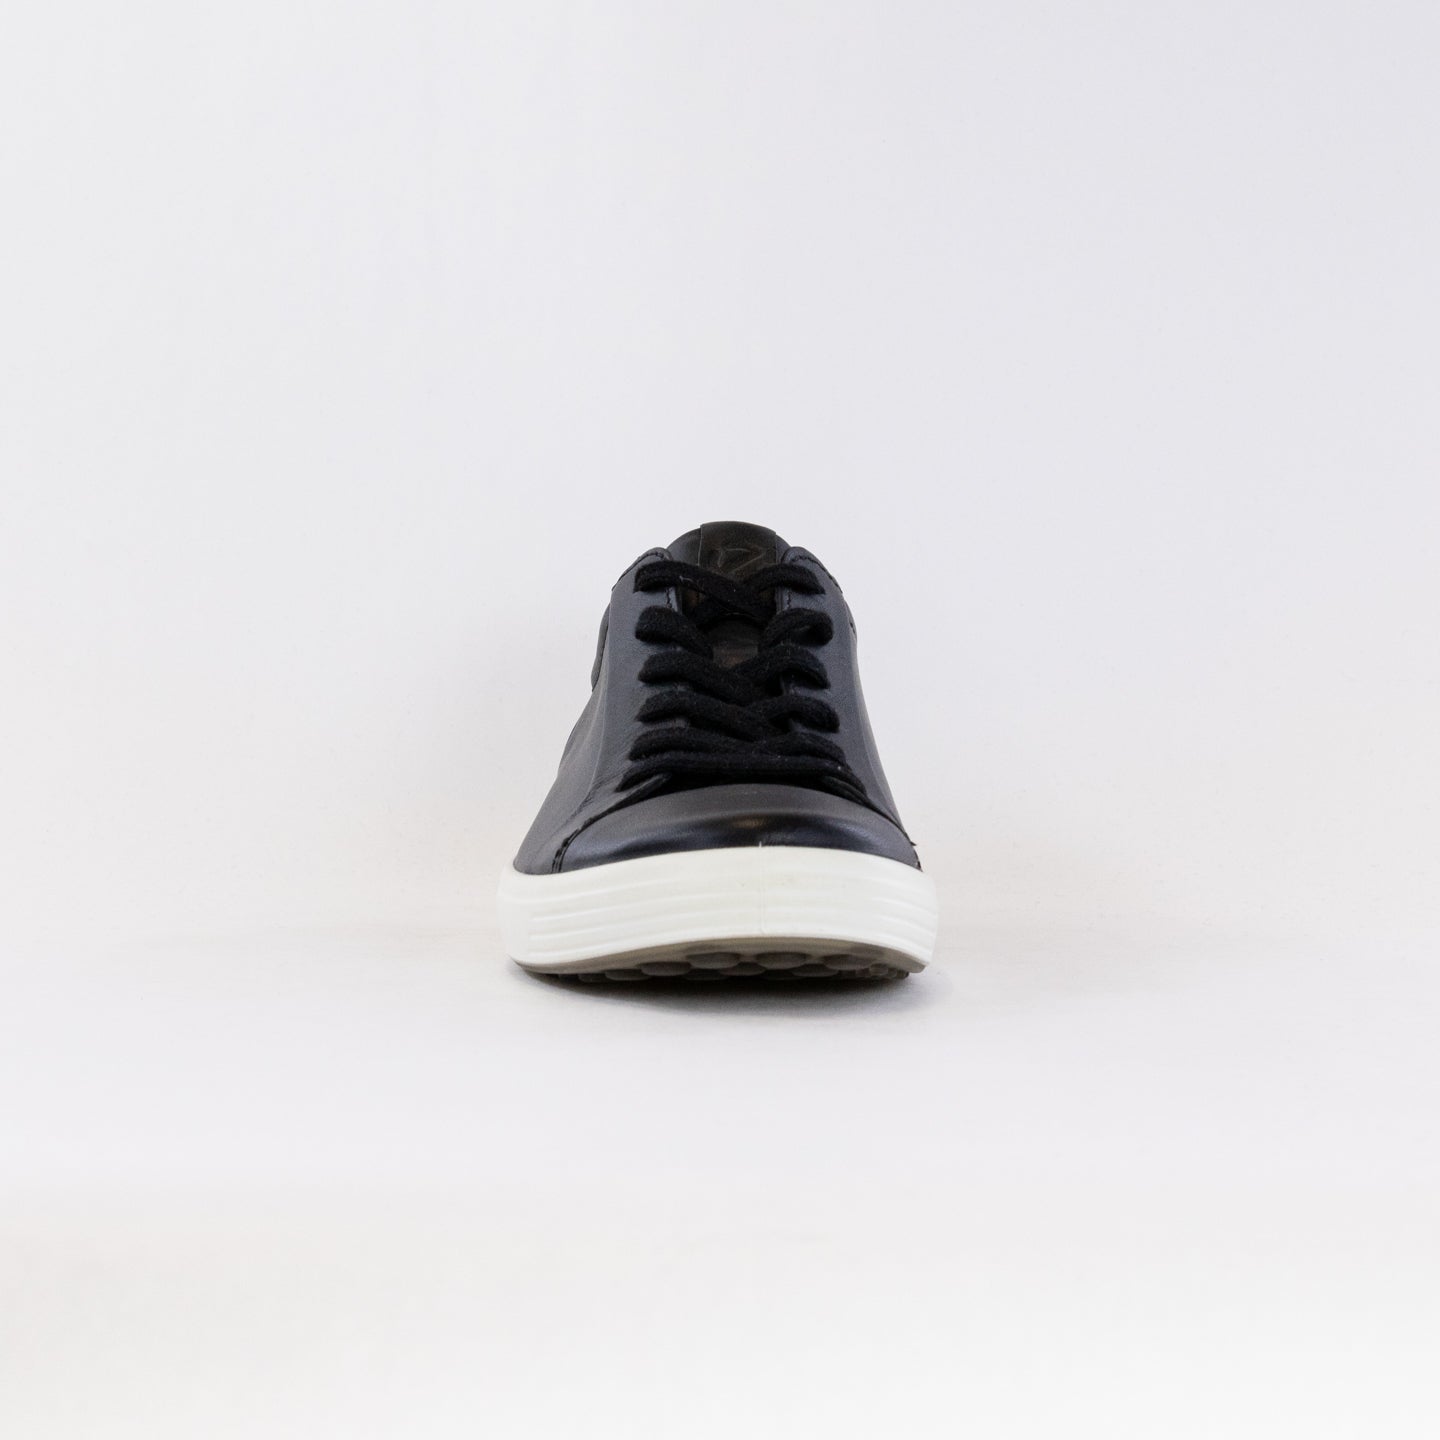 ECCO Soft 7 City Sneaker (Men's) - Black Leather